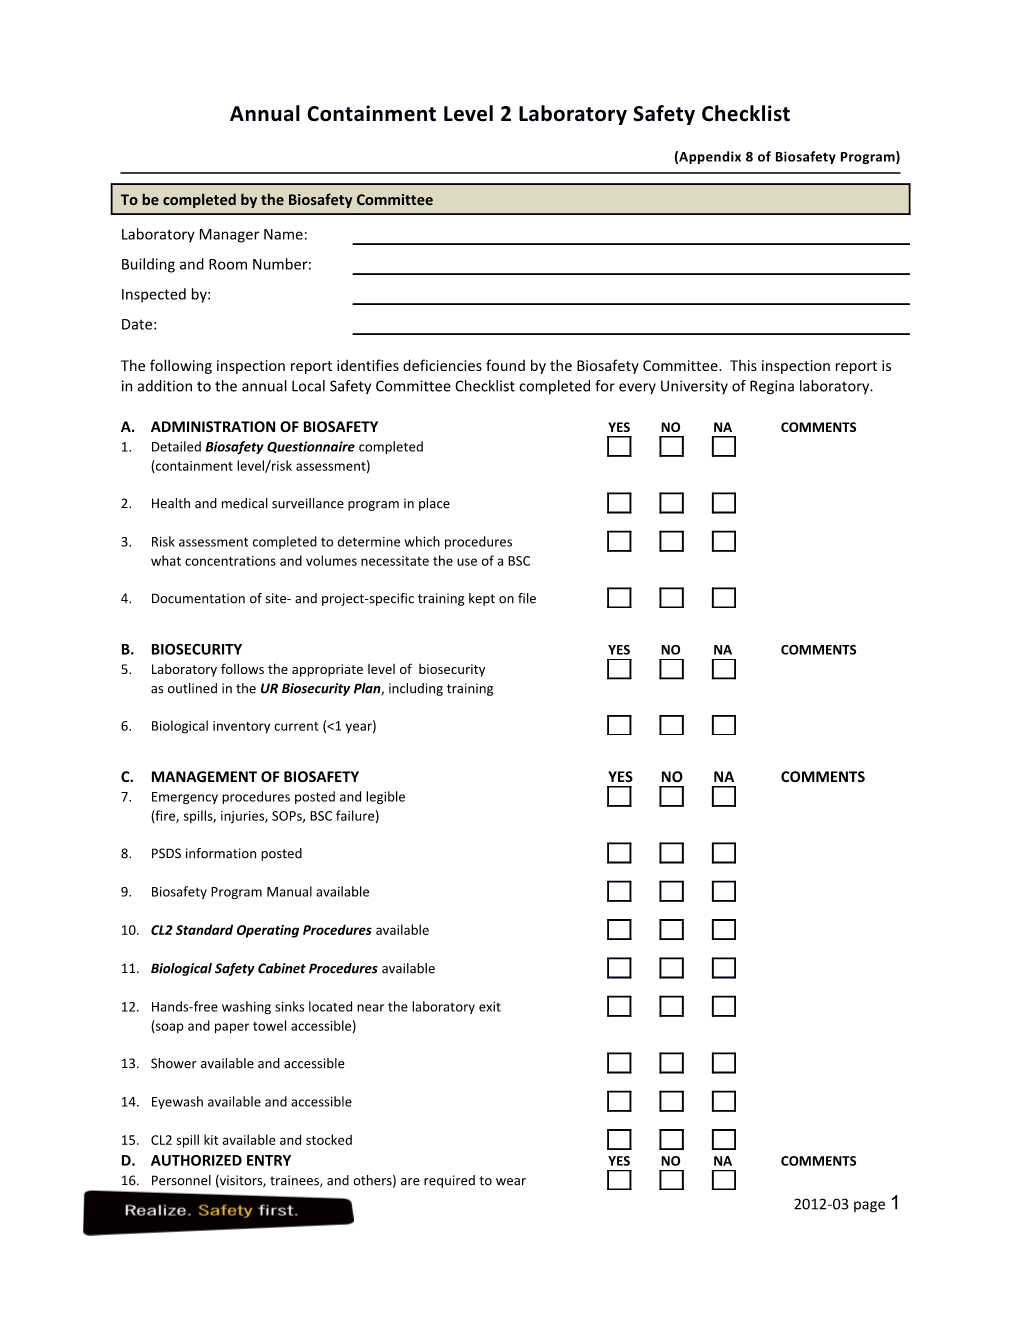 Annual Containment Level 2 Laboratory Safety Checklist